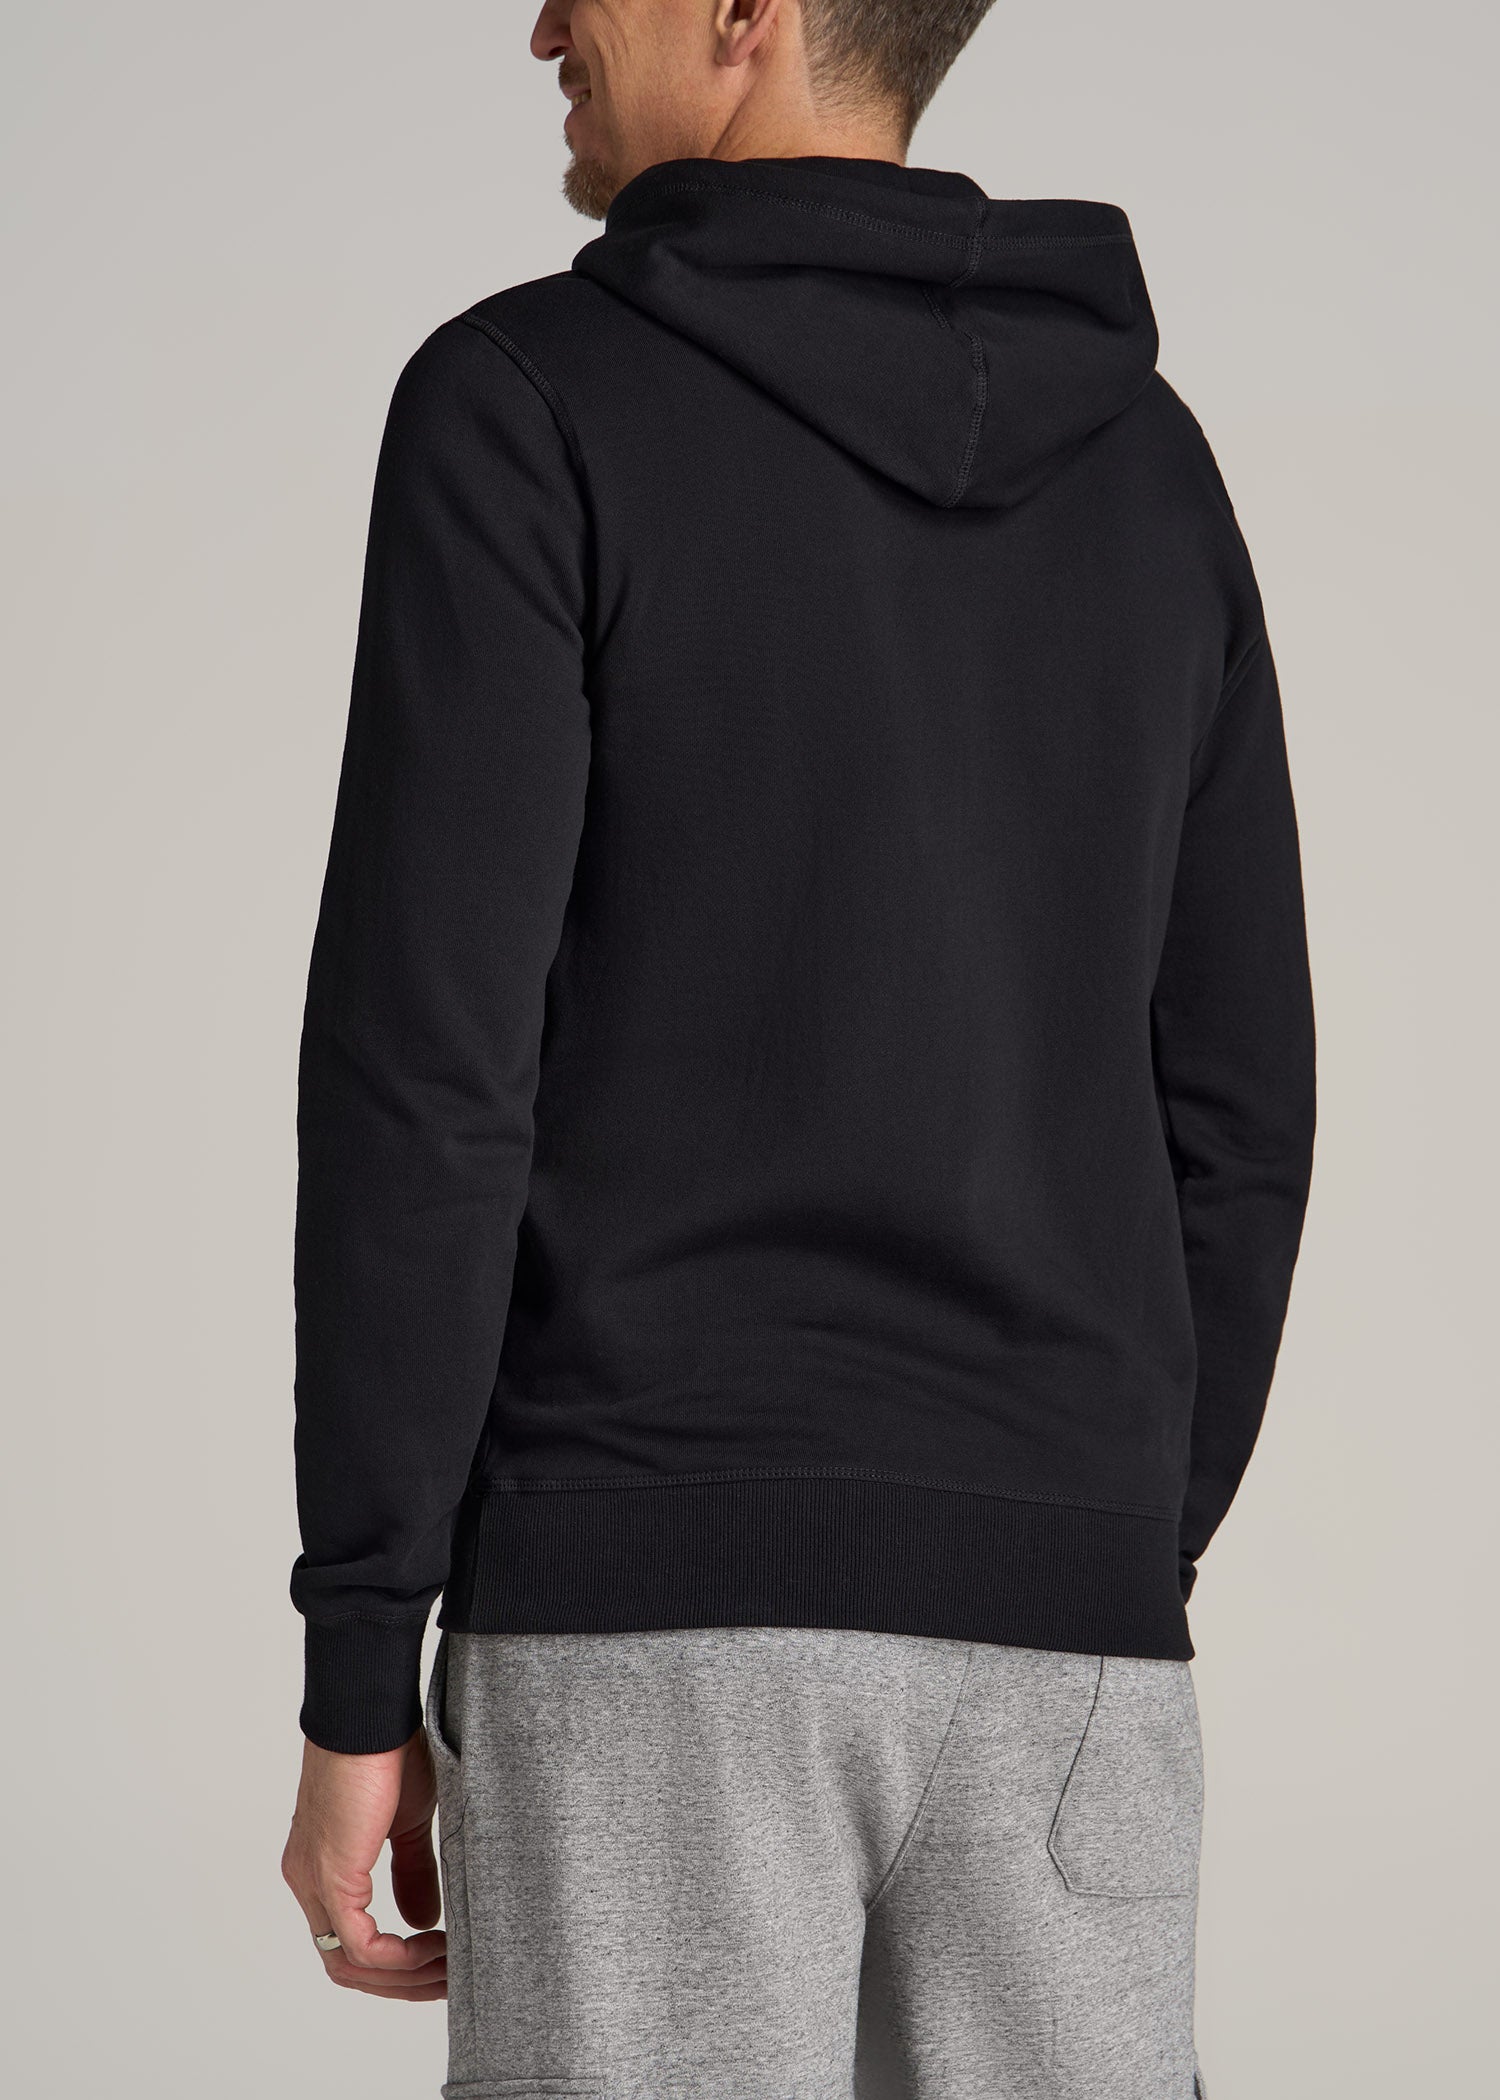 Men's Grey Hoodie - Brushed Cotton Hooded Sweatshirt - Casual Clothes – Top  Top